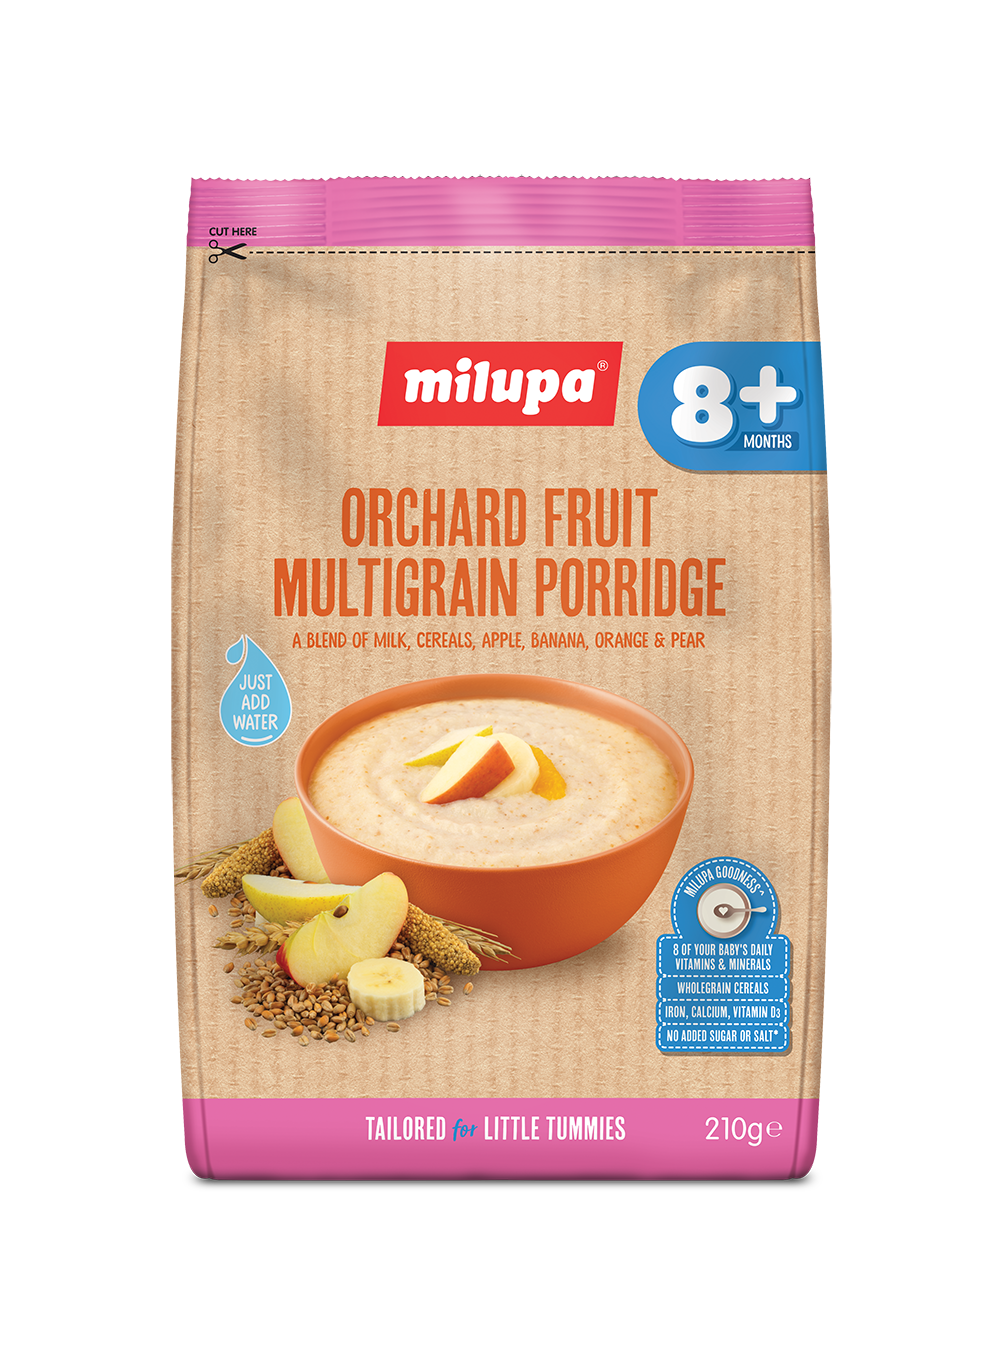 Orchard Fruit Multigrain Porridge image